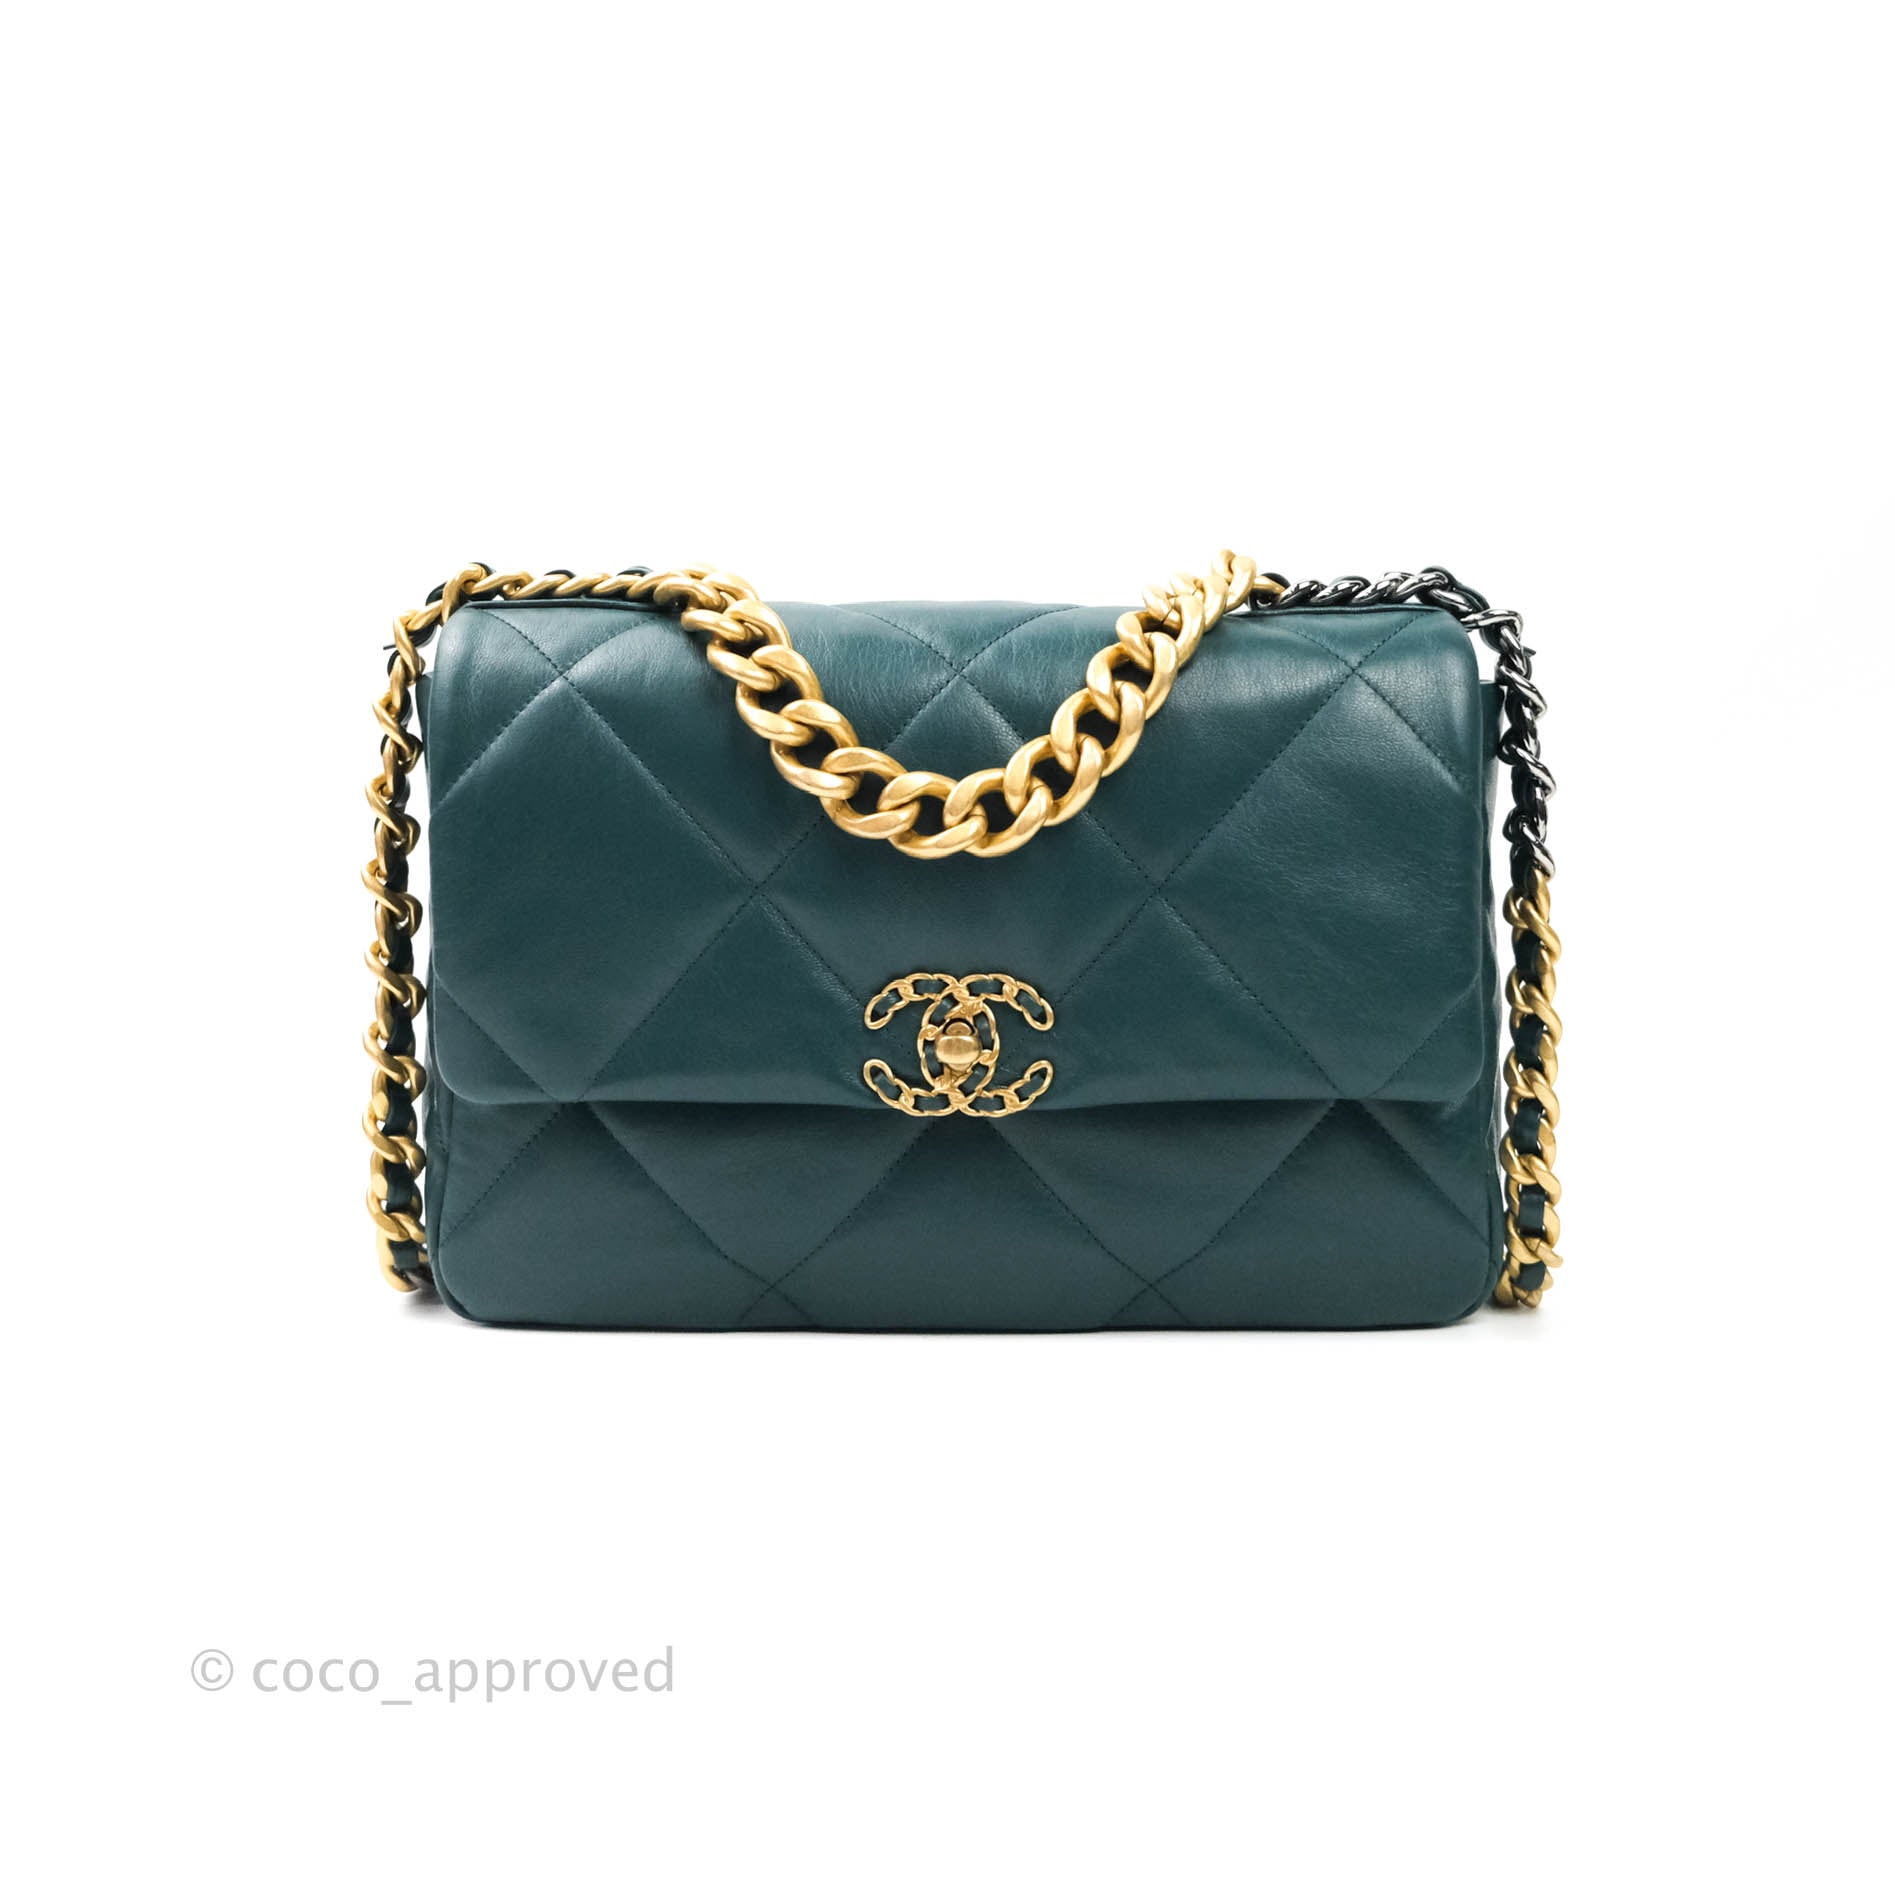 Chanel 19 Large Pouch Green Handbag